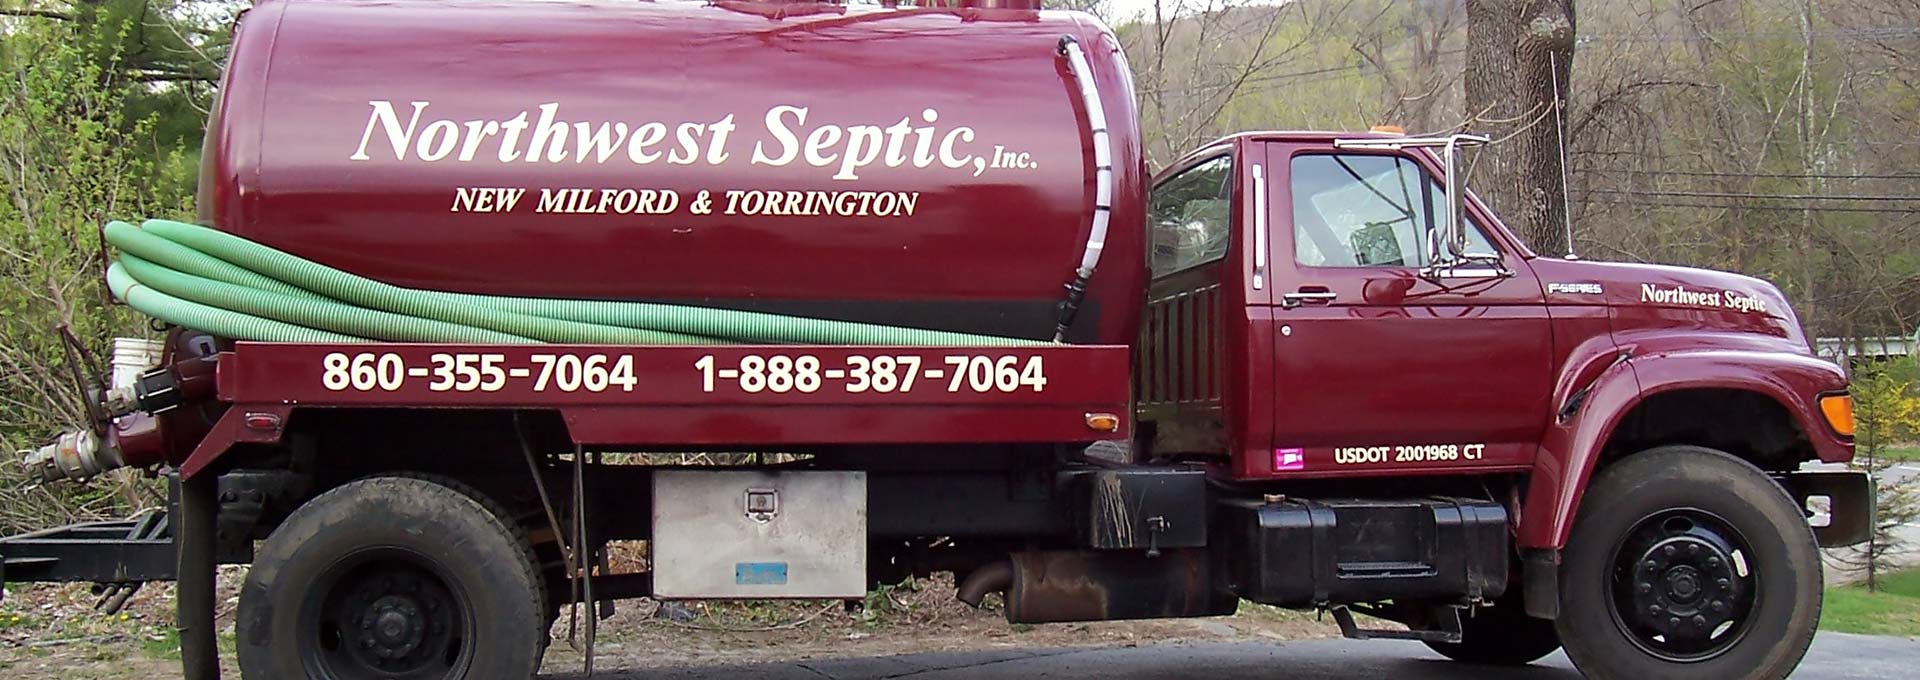 Northwest Septic Inc truck